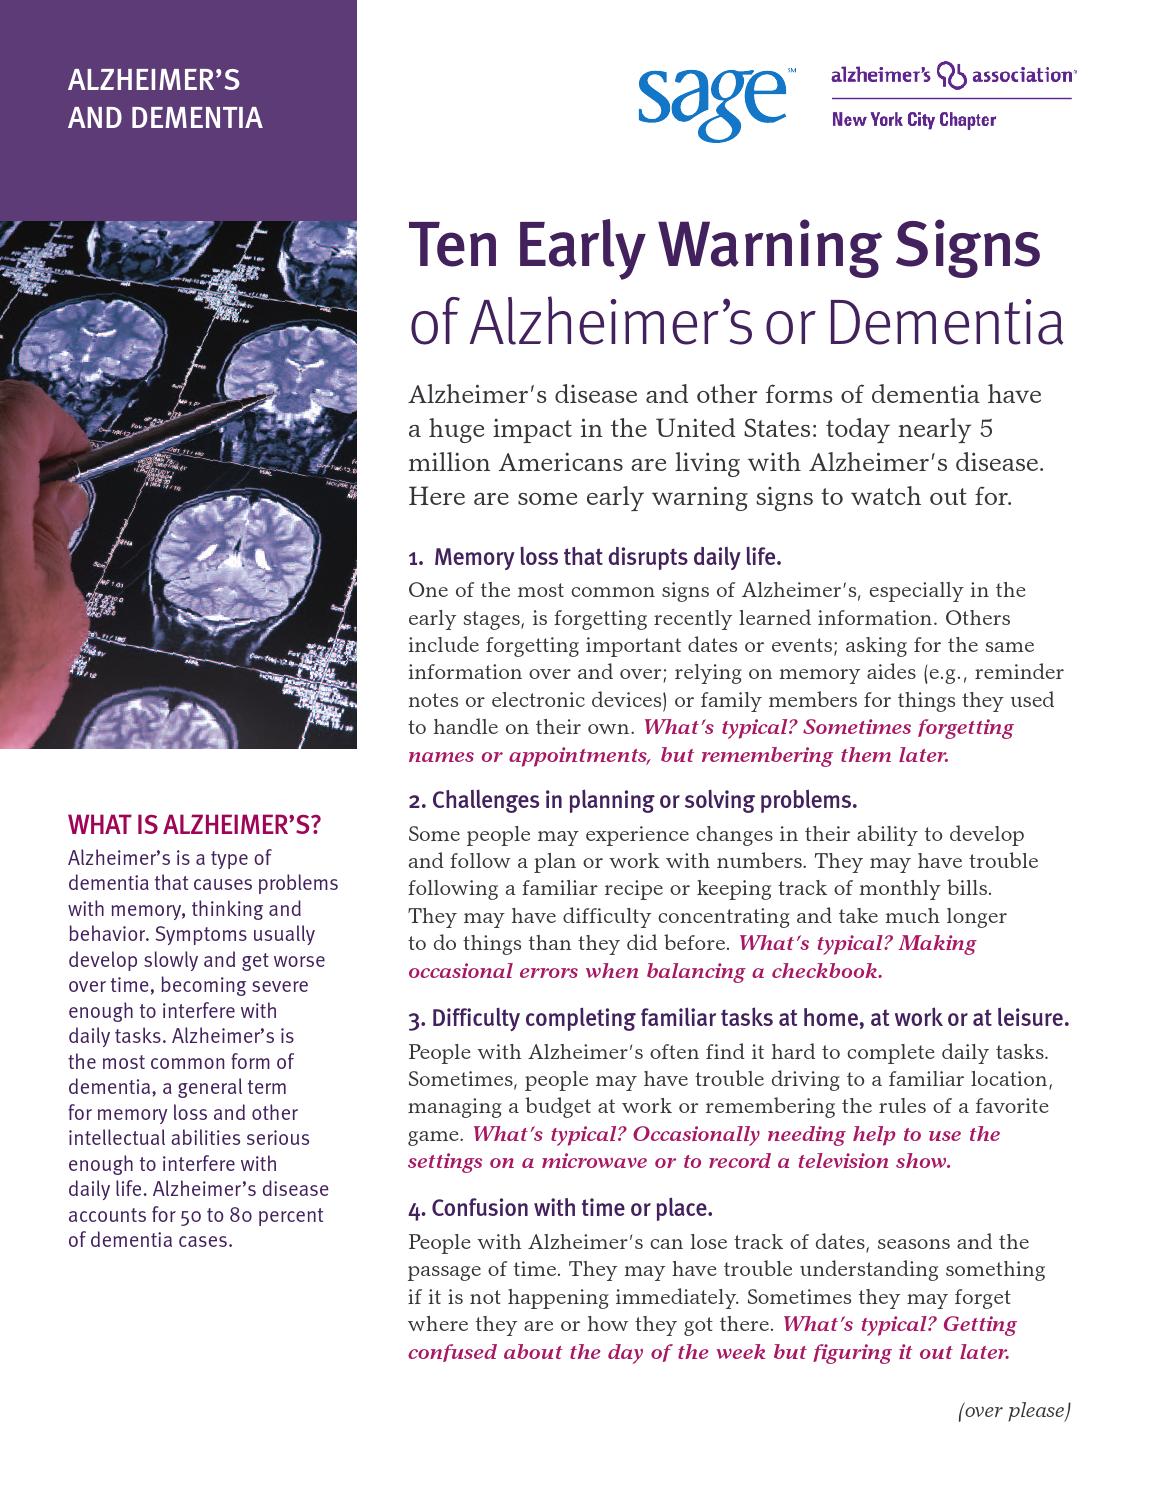 Ten Early Warning Signs of Alzheimer